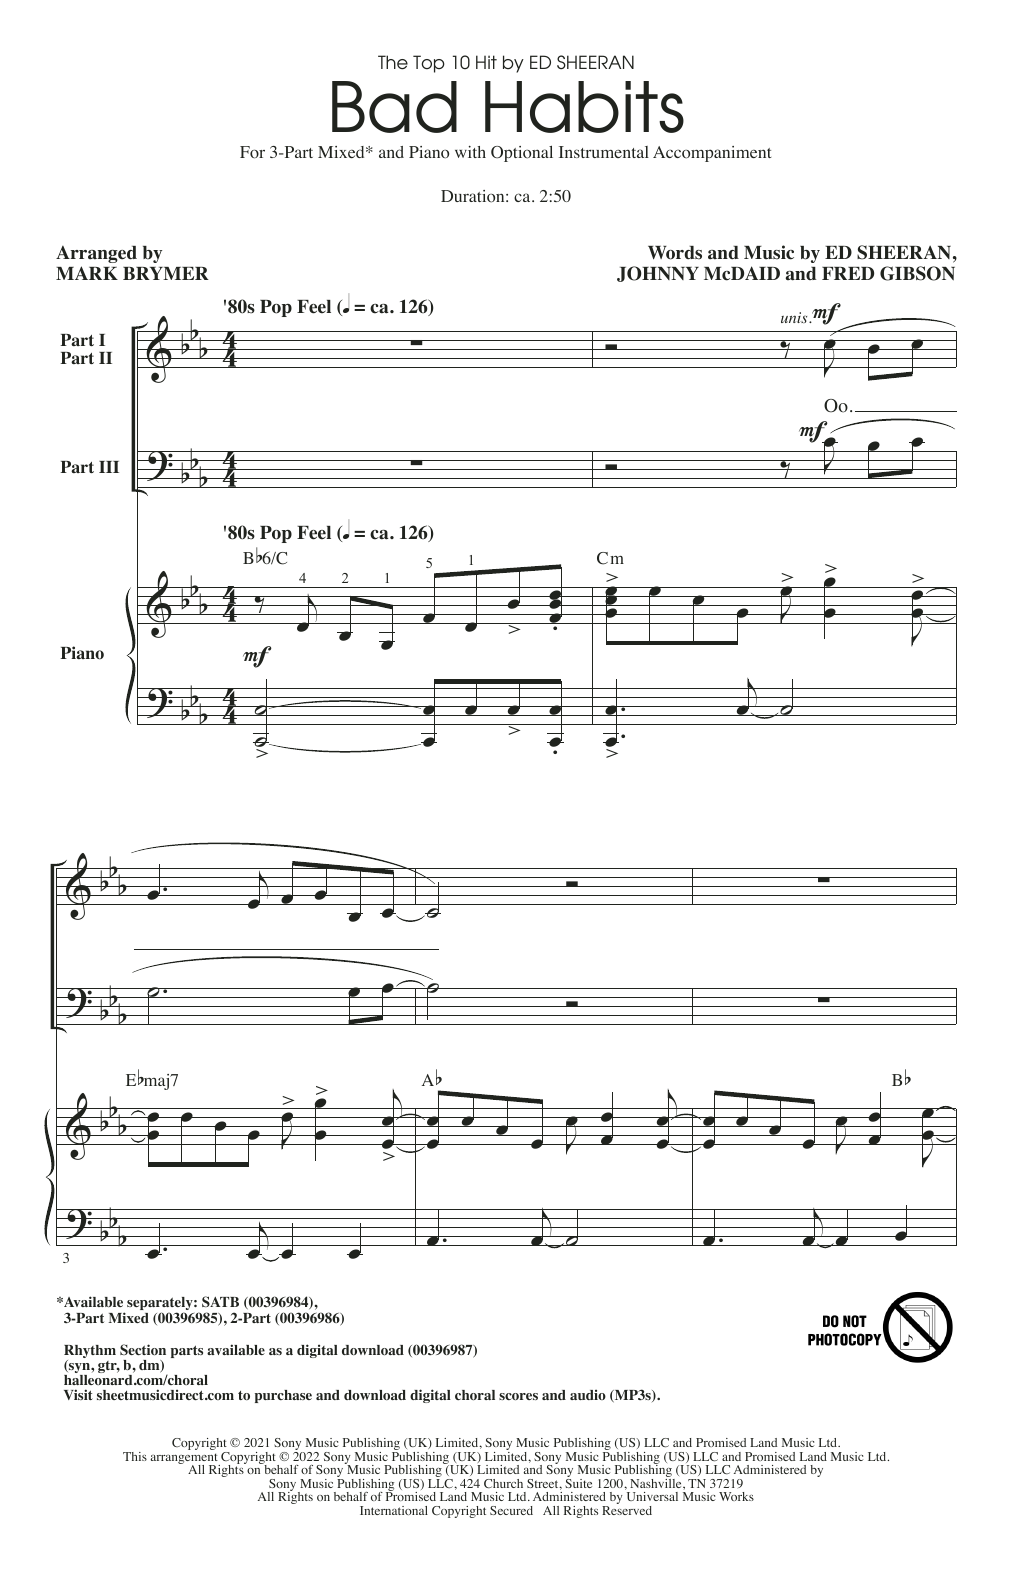 Ed Sheeran Bad Habits (arr. Mark Brymer) Sheet Music Notes & Chords for SATB Choir - Download or Print PDF